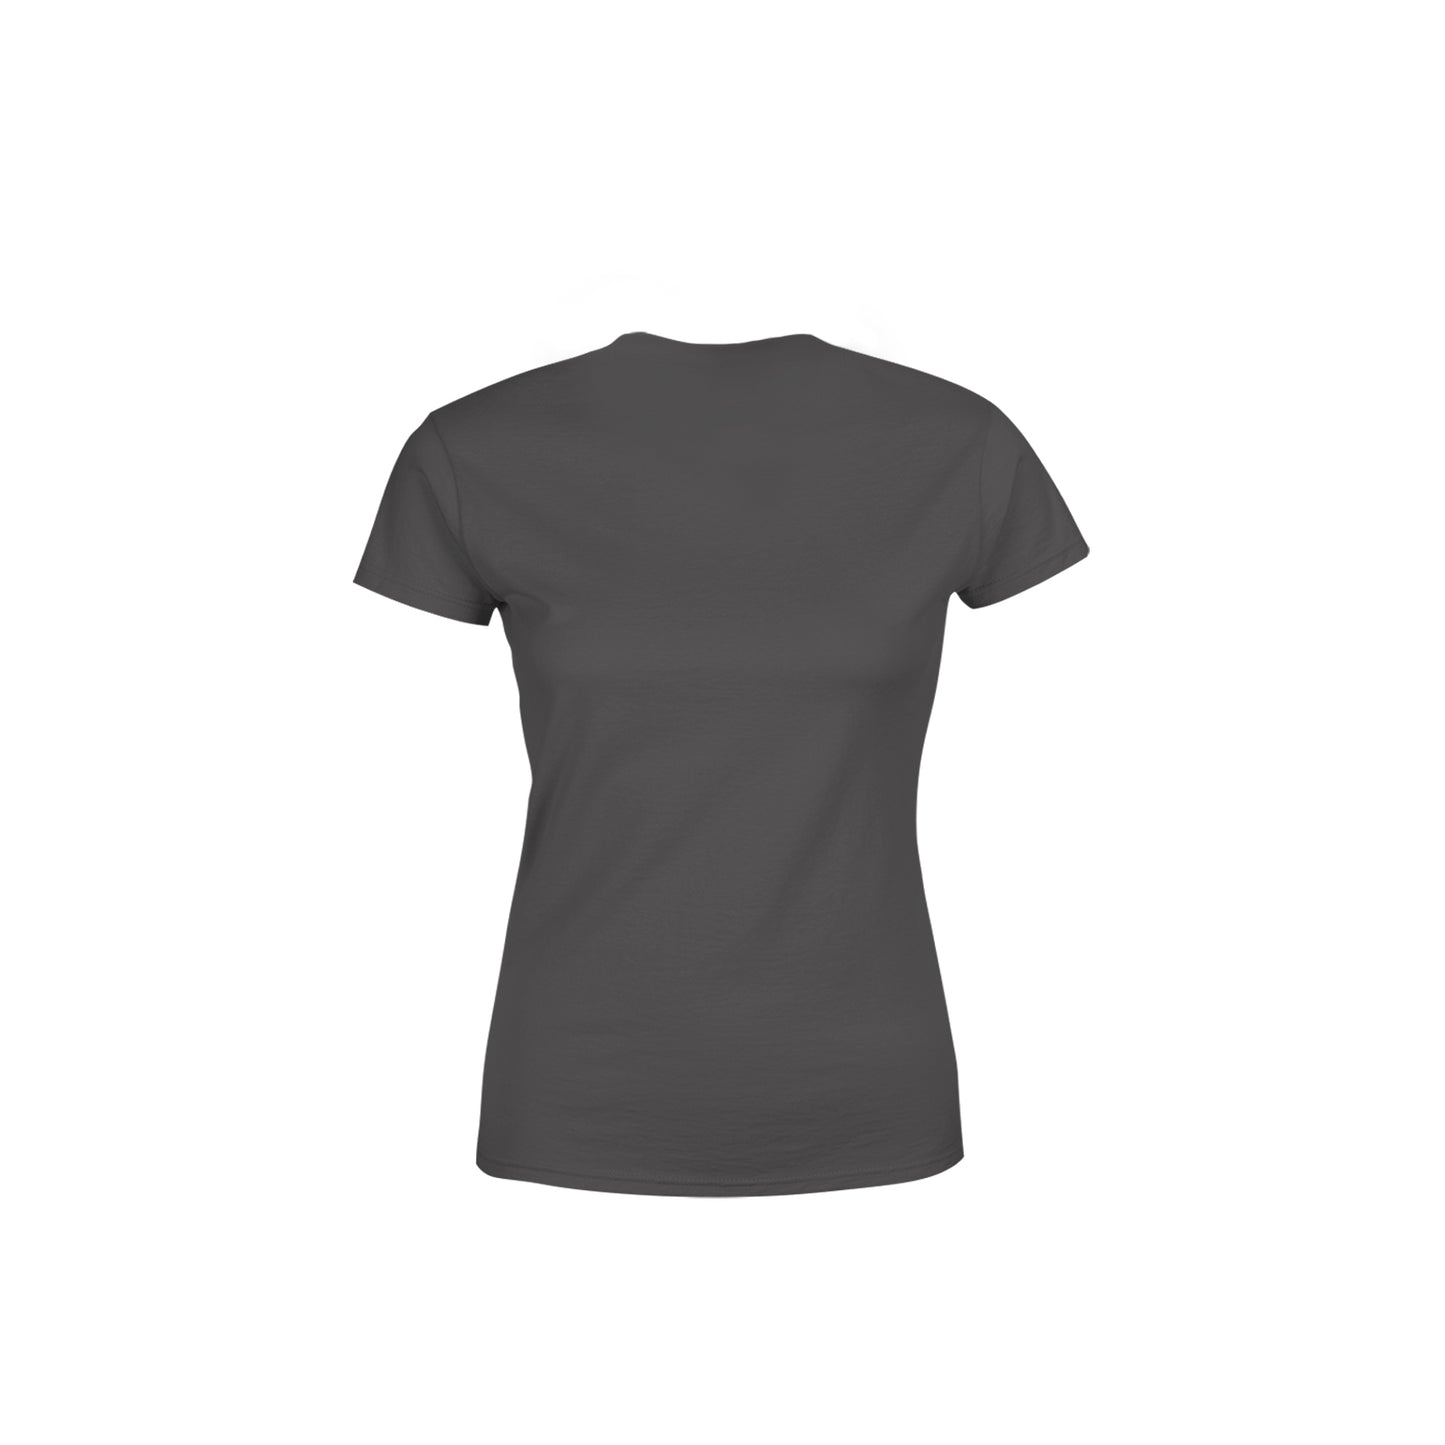 34 Number Women's T-Shirt (Charcoal Grey)